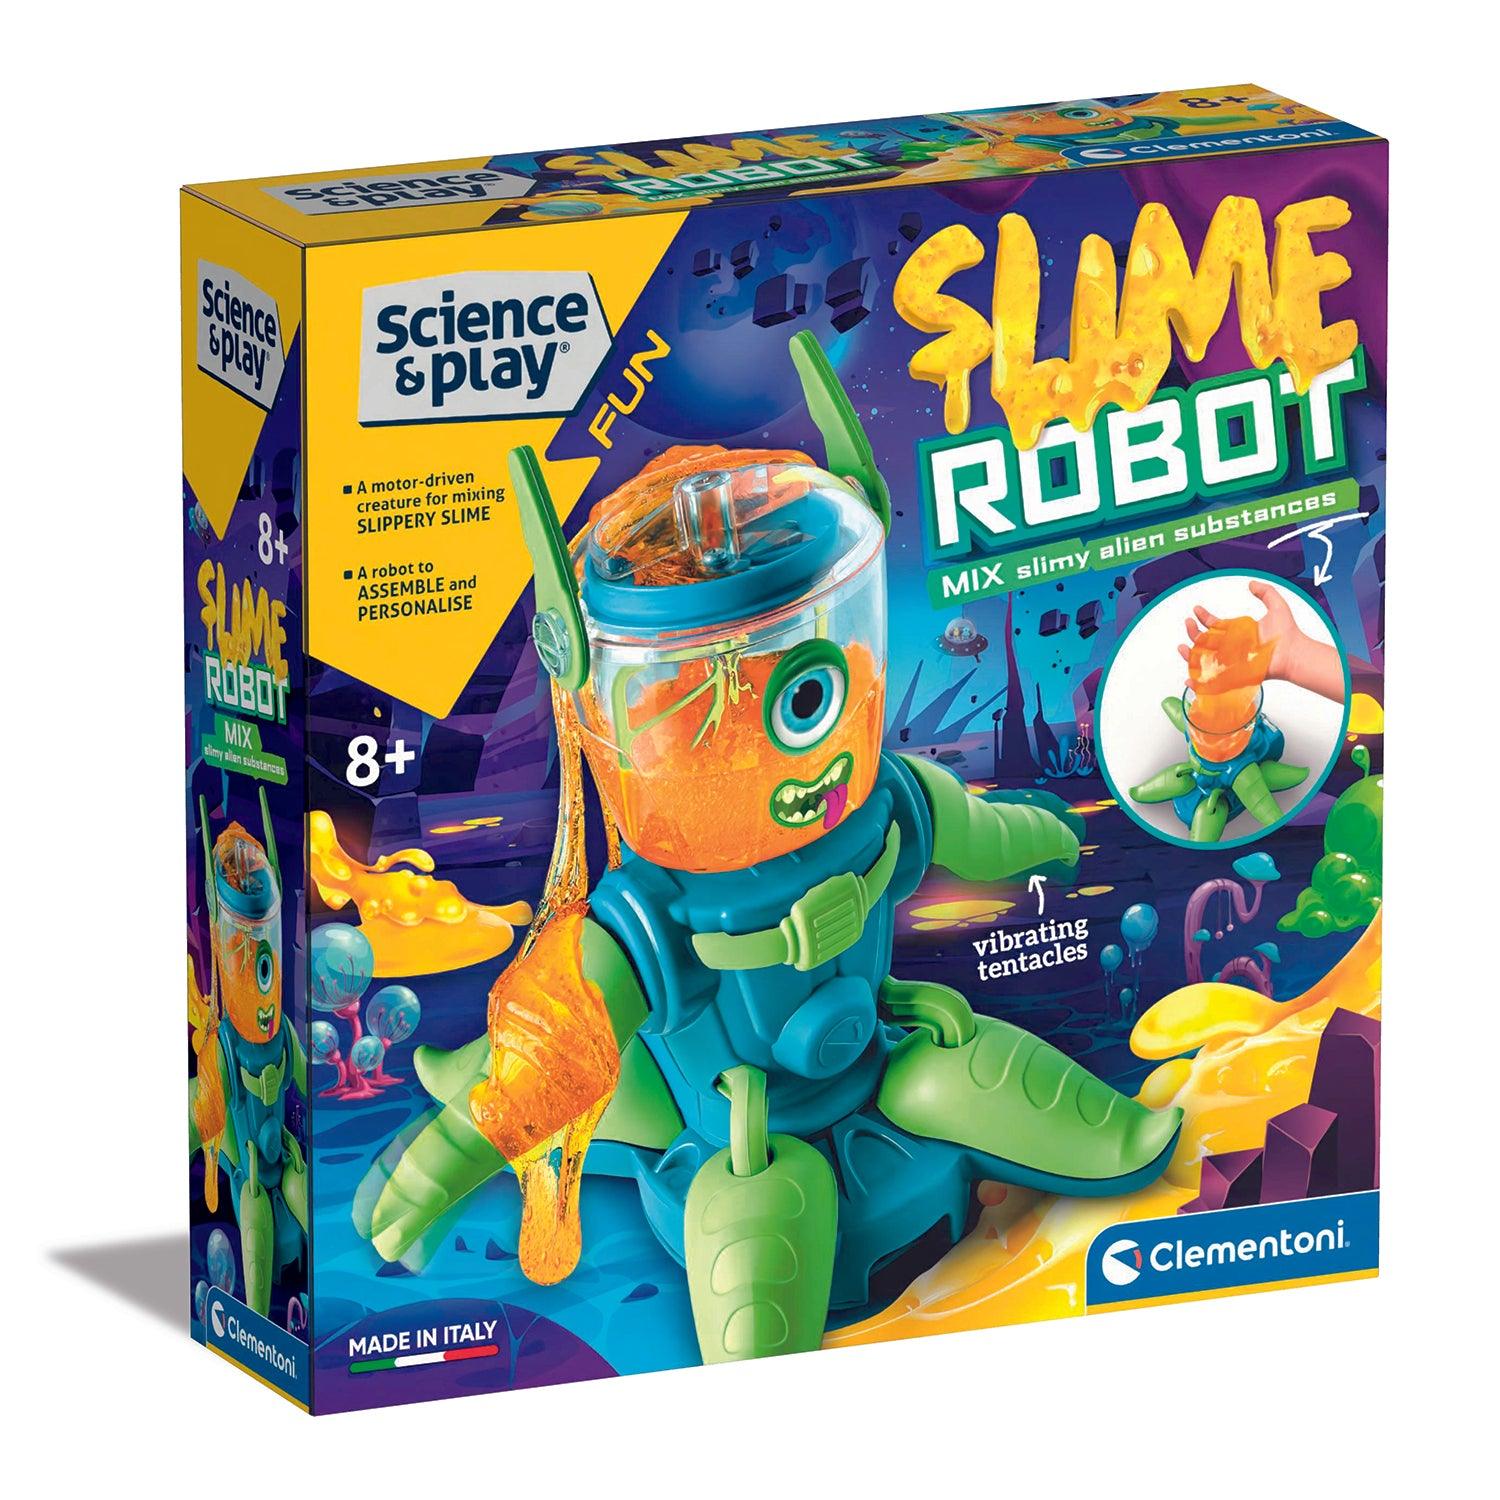 Slime Robot - Robotics - Science Museum Shop